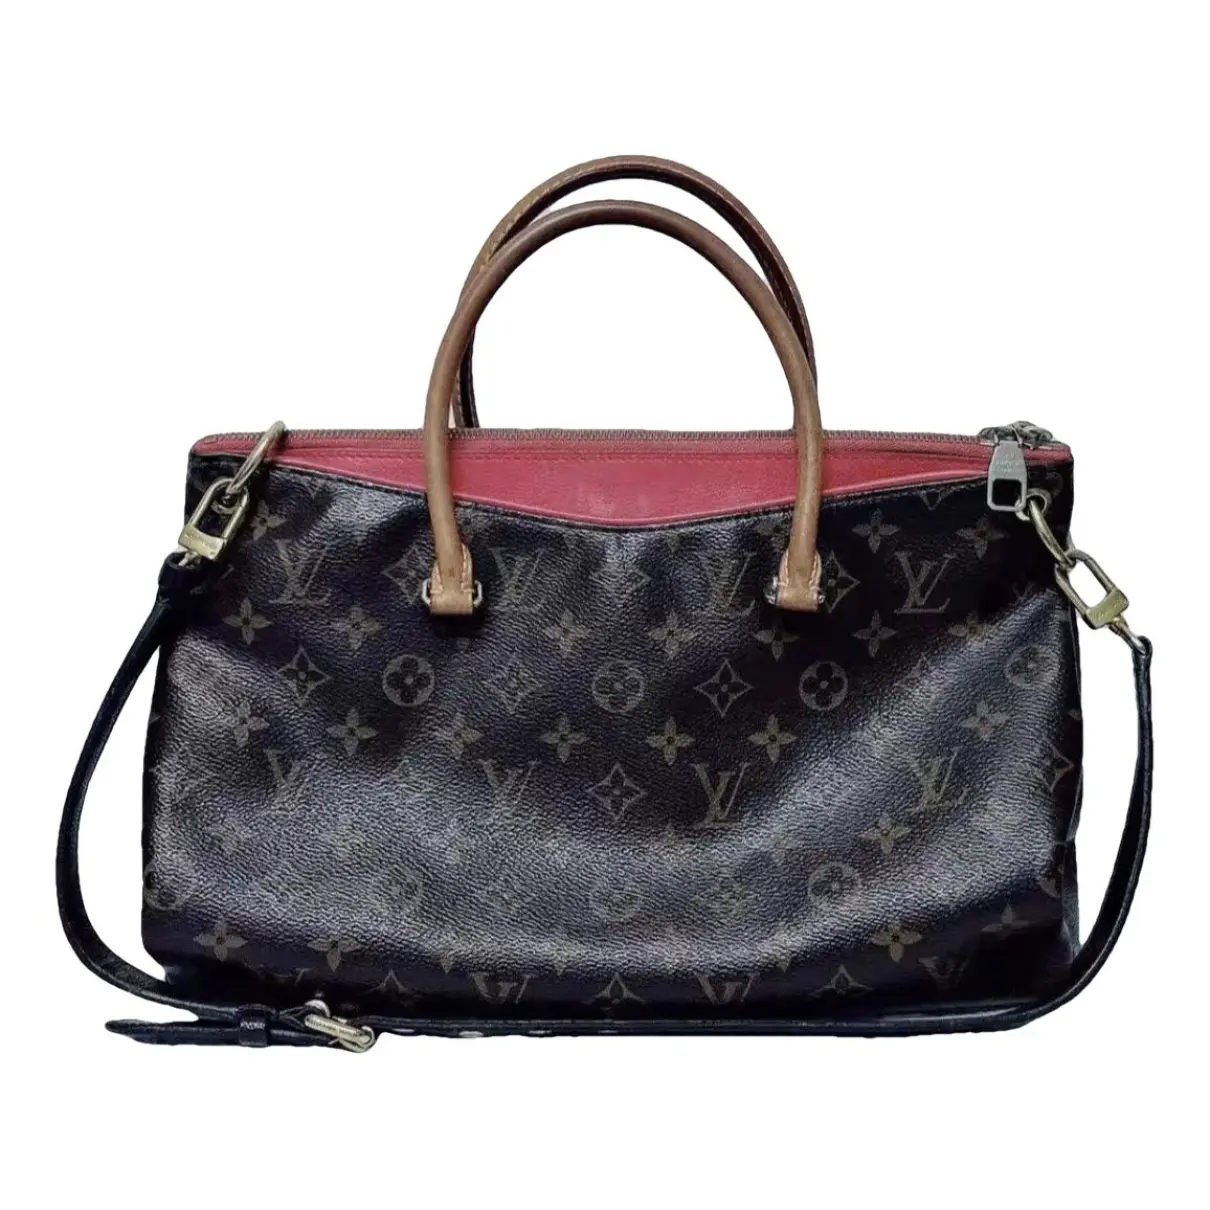 Pallas leather handbag